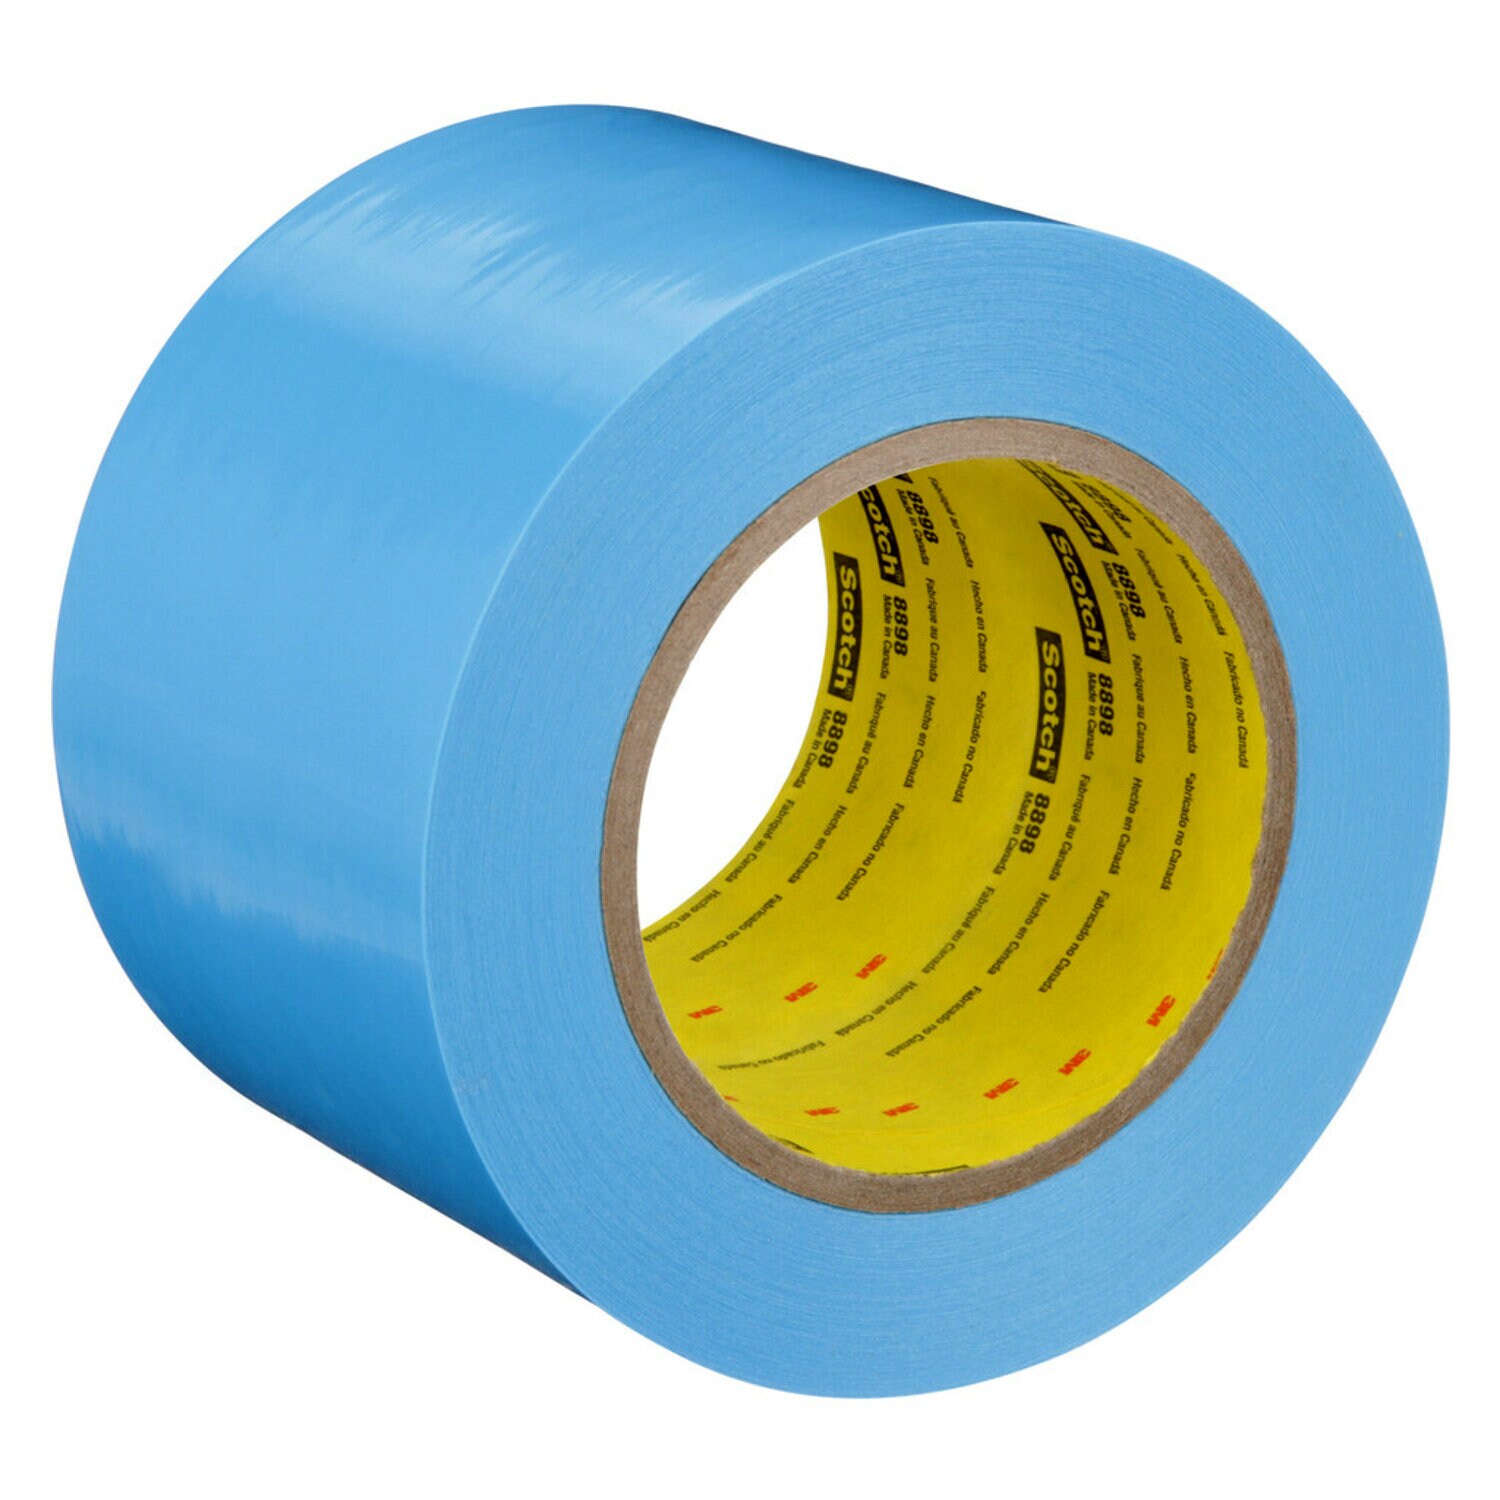 7000123859 - Scotch Strapping Tape 8898, Blue, 72 mm x 55 m, 4.6 mil, 12 rolls per
case